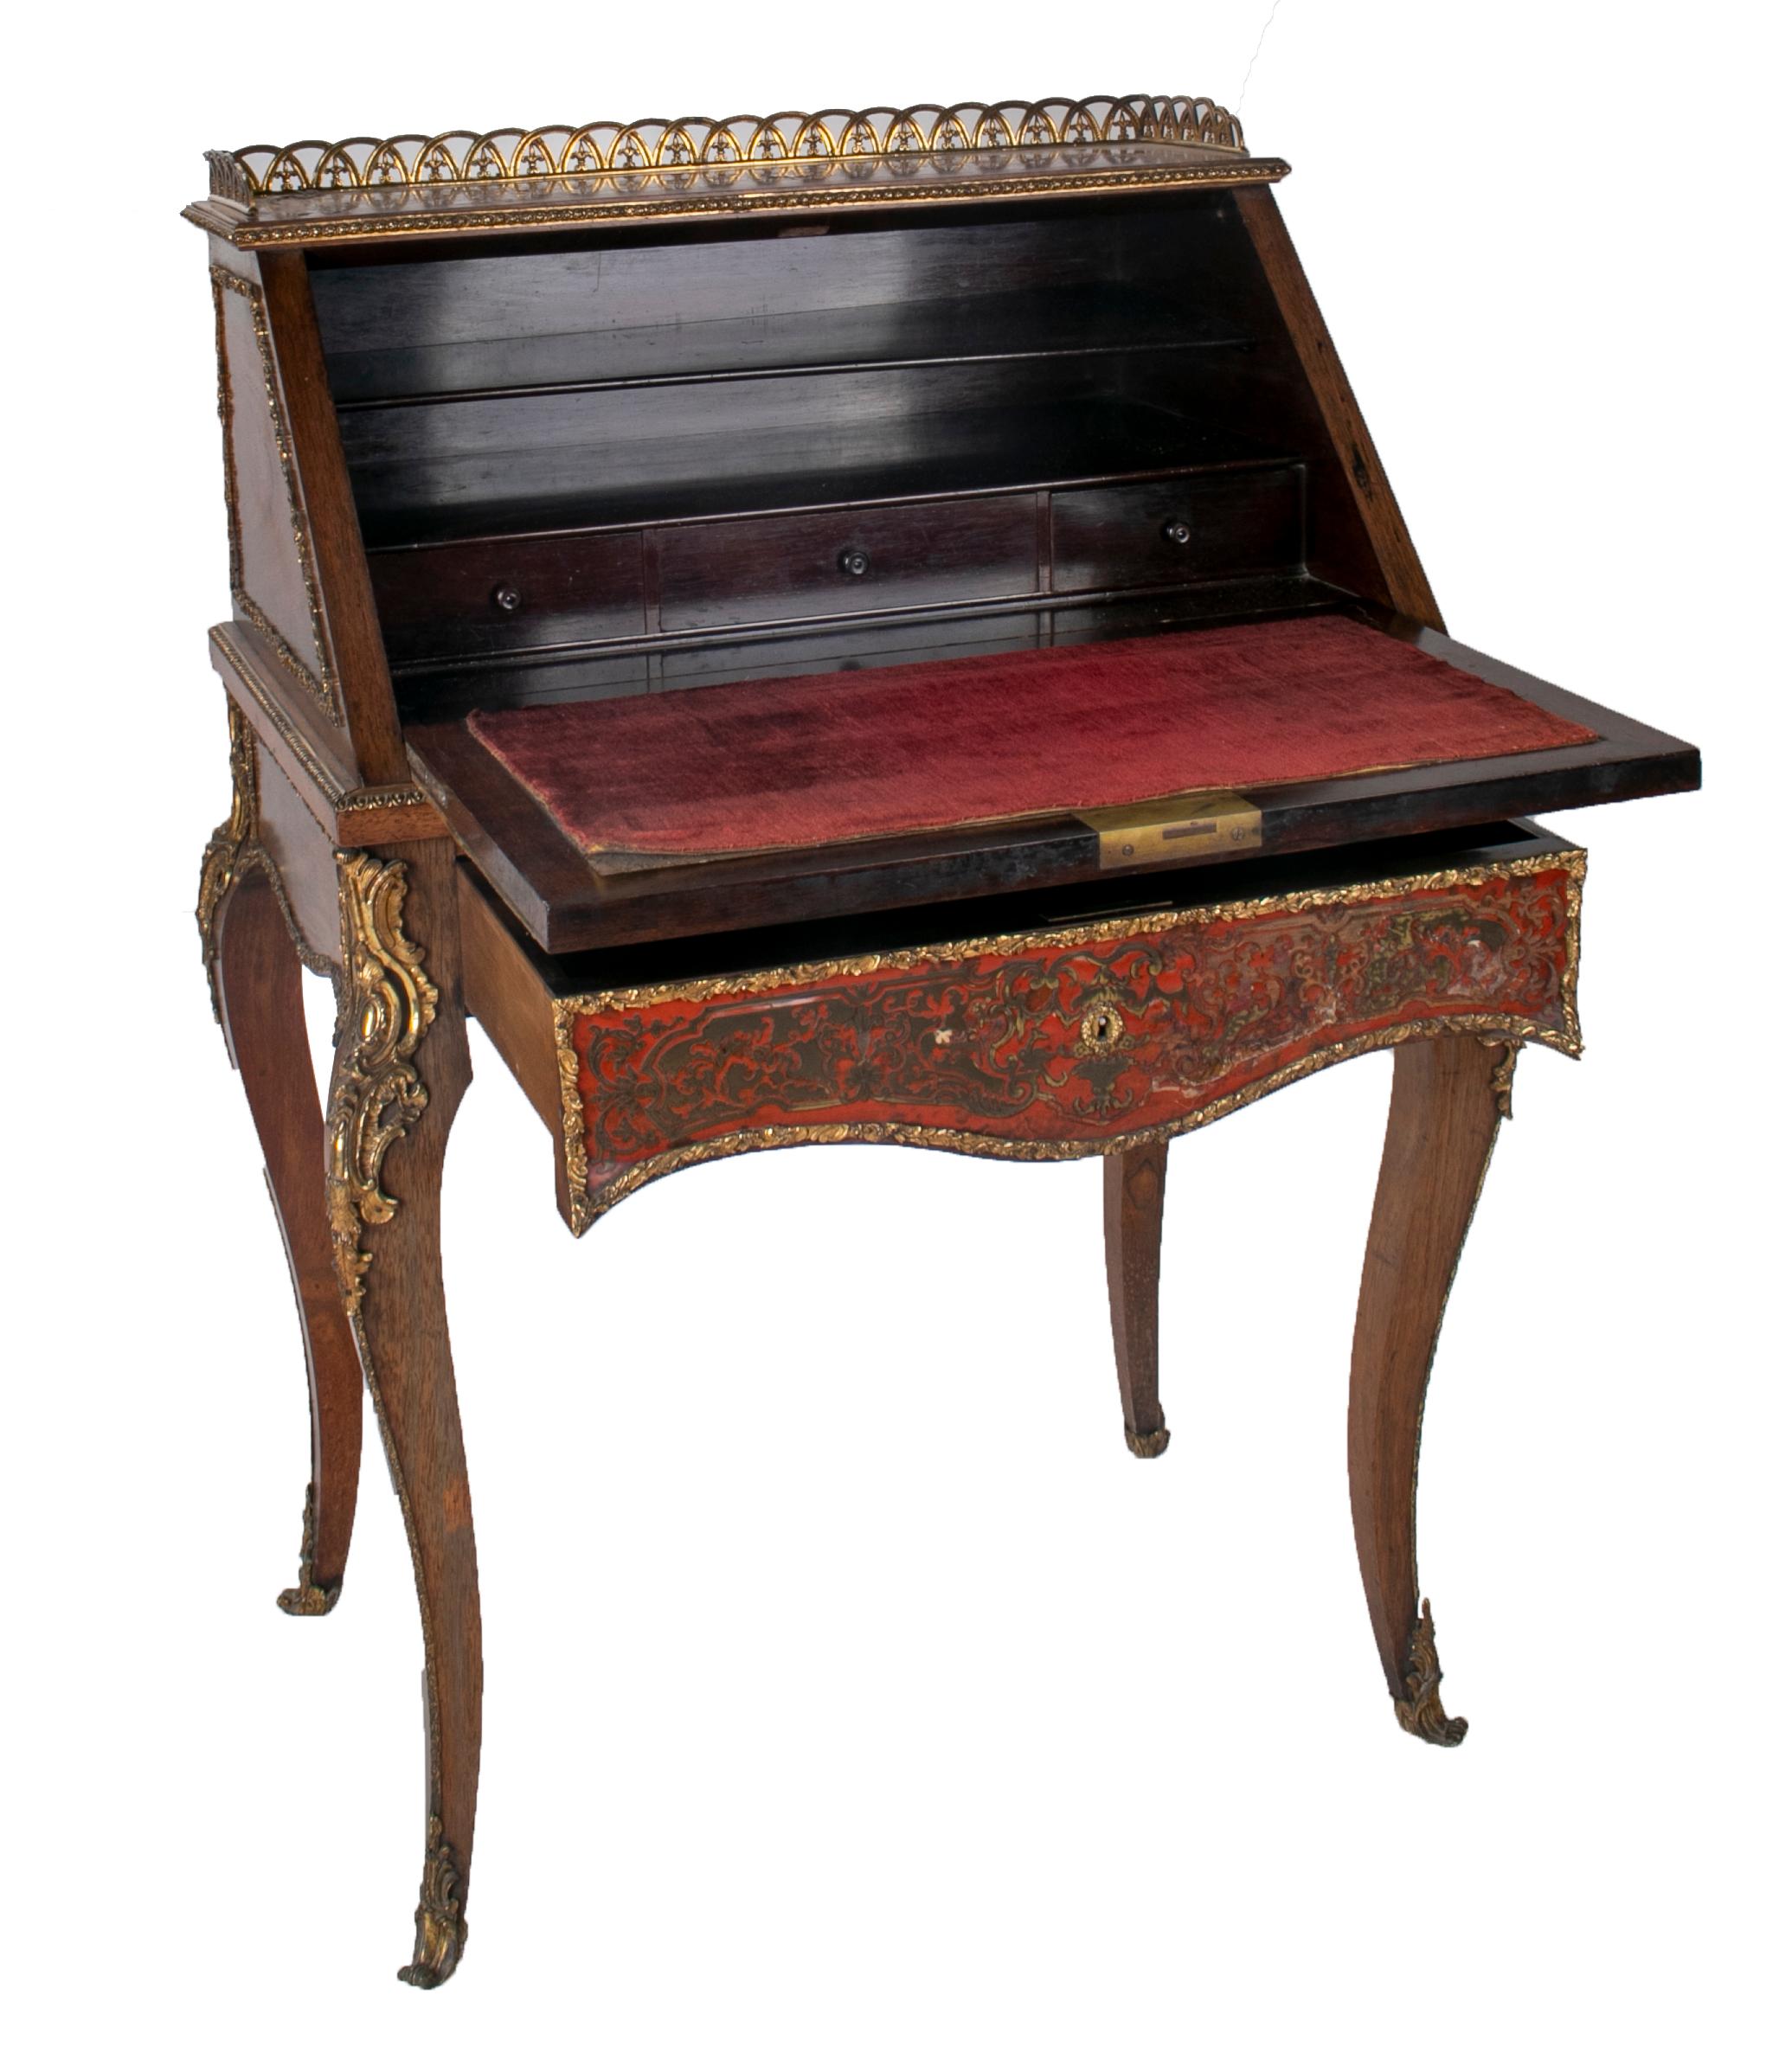 19th century French feminine Boulle bureau (office desk, escritoire).